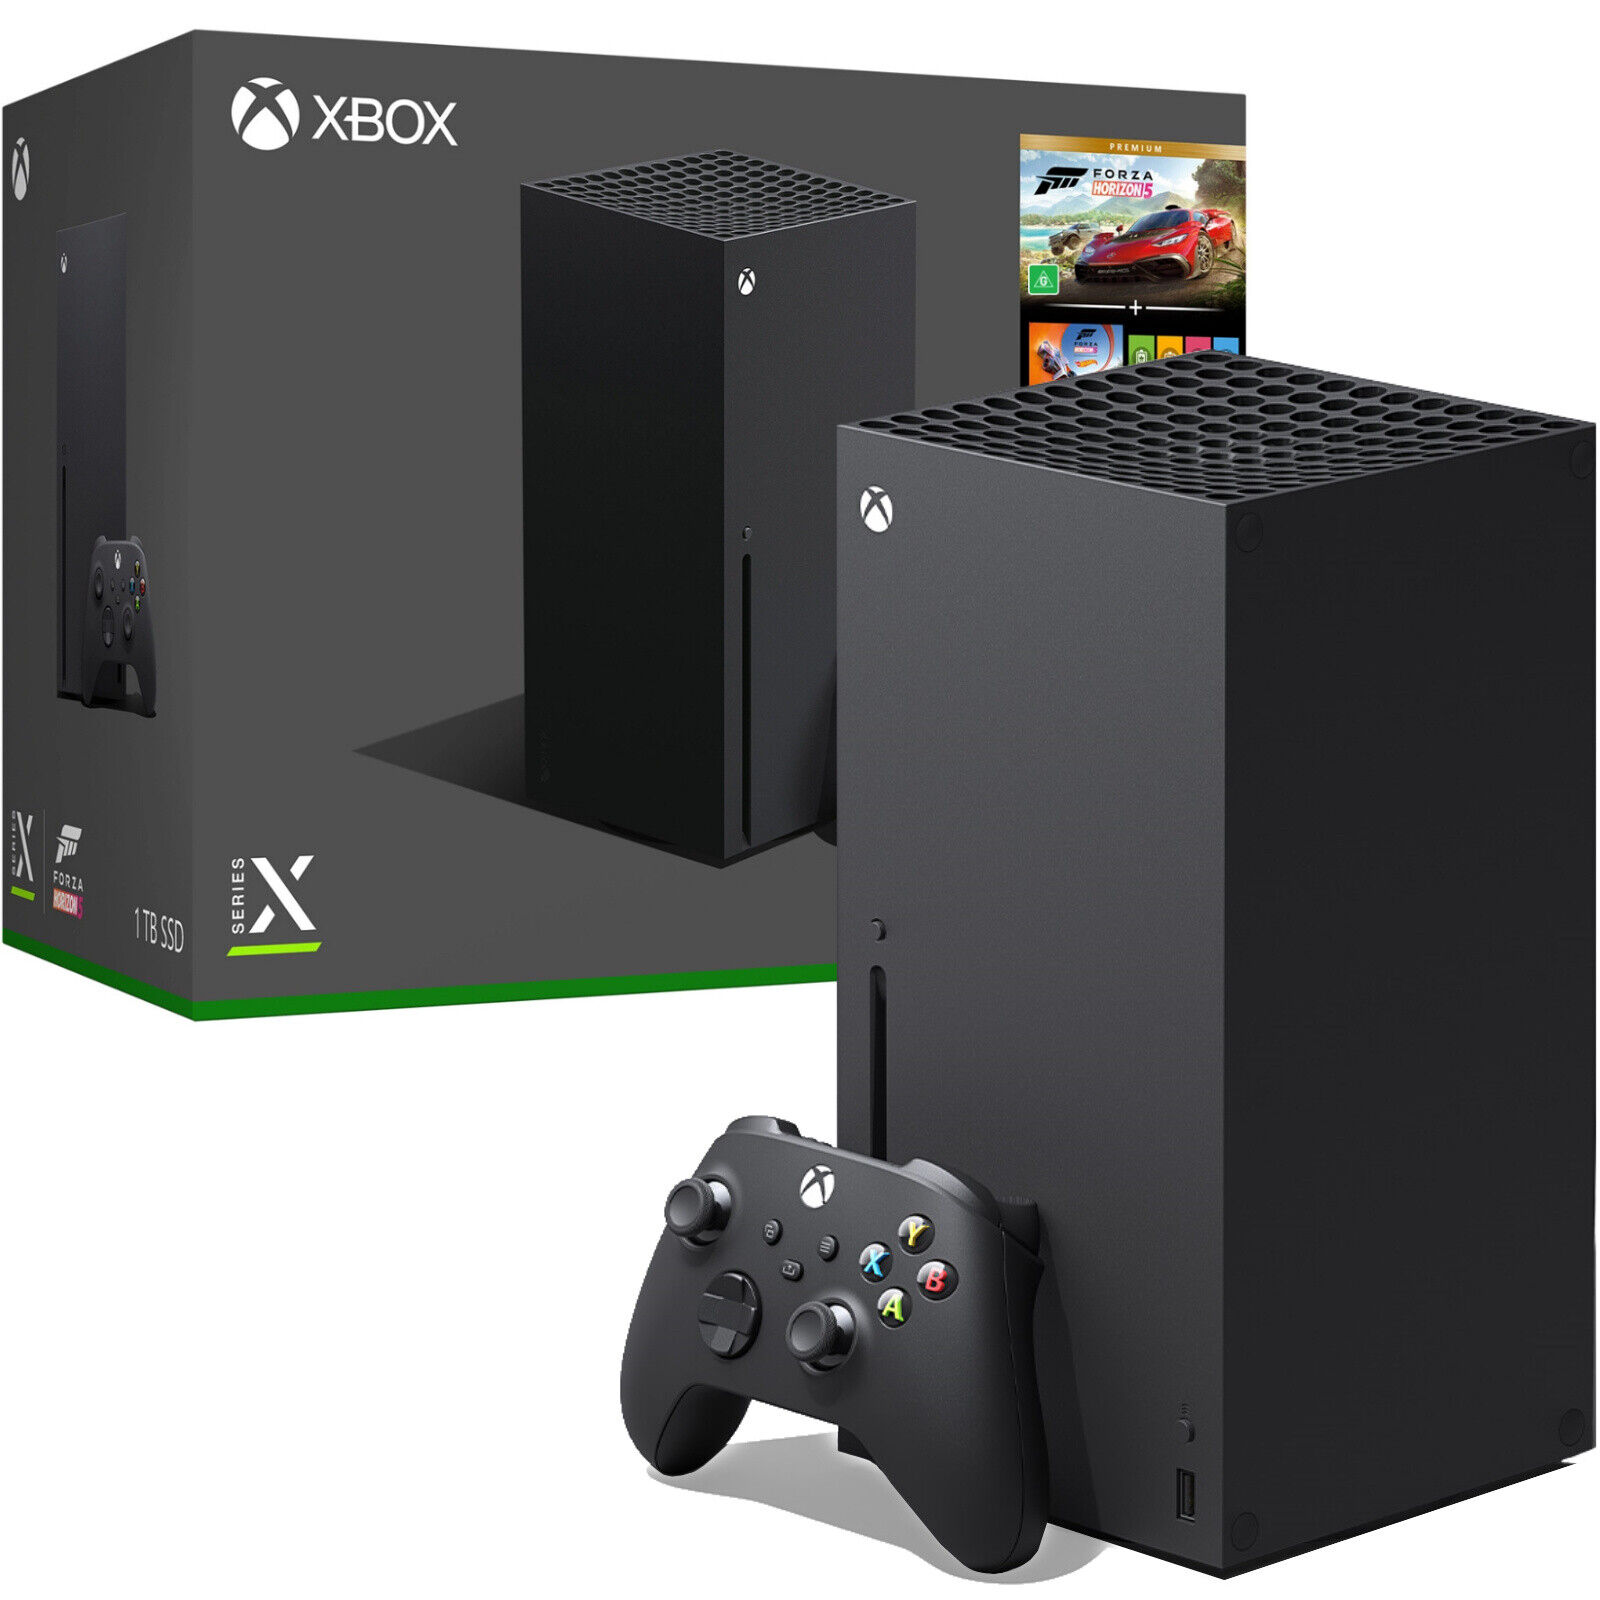 Forza Horizon 5 – Xbox Series X / XBOX ONE (Brand NEW Sealed) - FREE  SHIPPING 889842889222